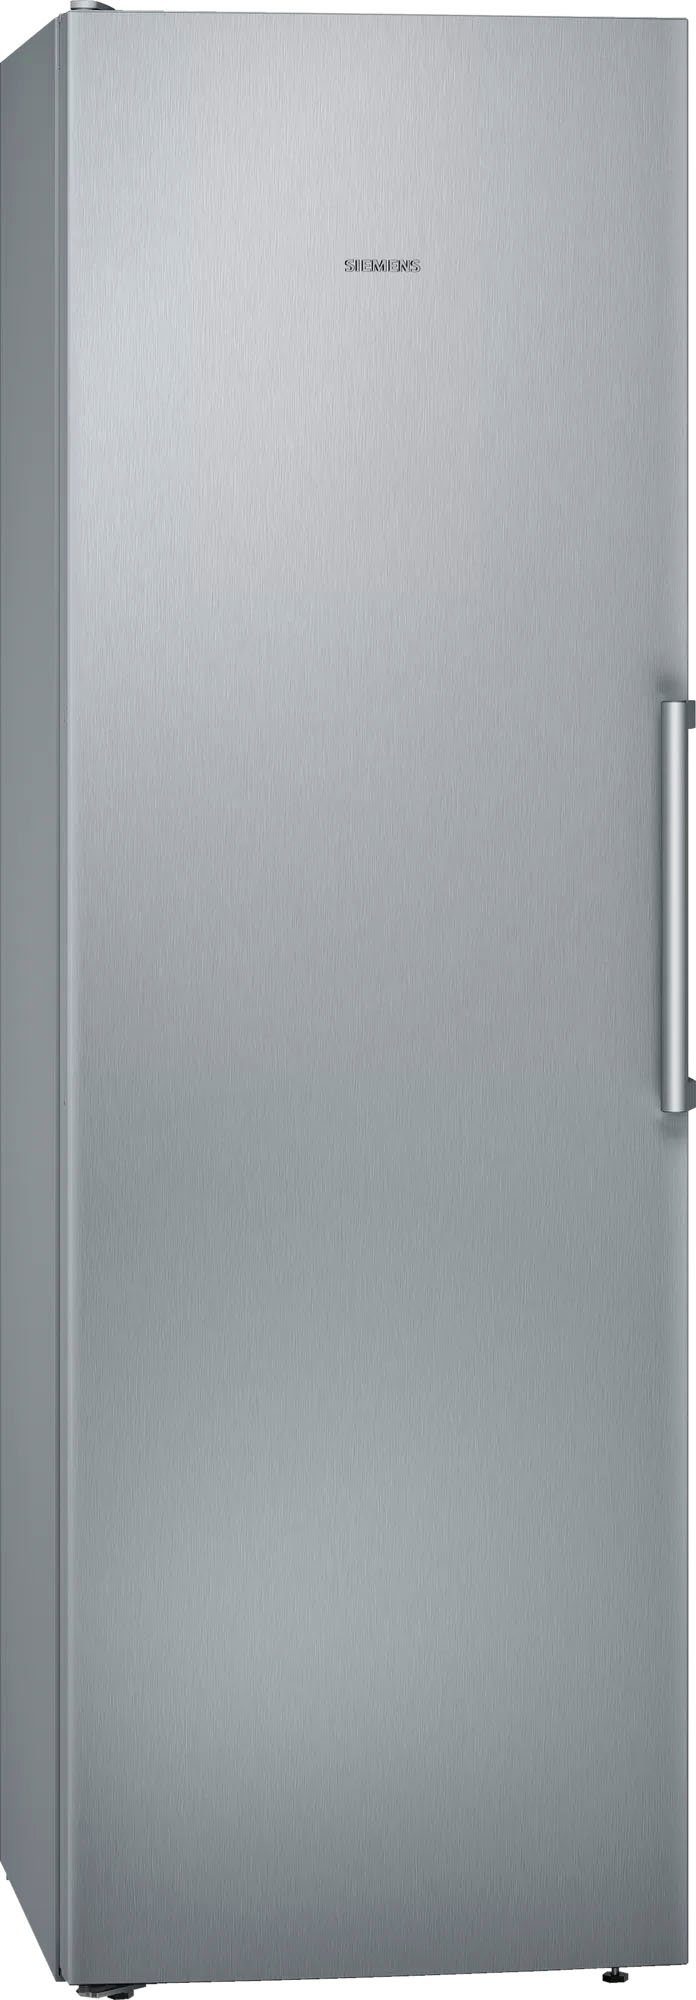 SIEMENS Kühlschrank iQ300 KS36VVIEP, 186 cm hoch, 60 cm breit Edelstahl mit Anti-Fingerprint | Kühlschränke